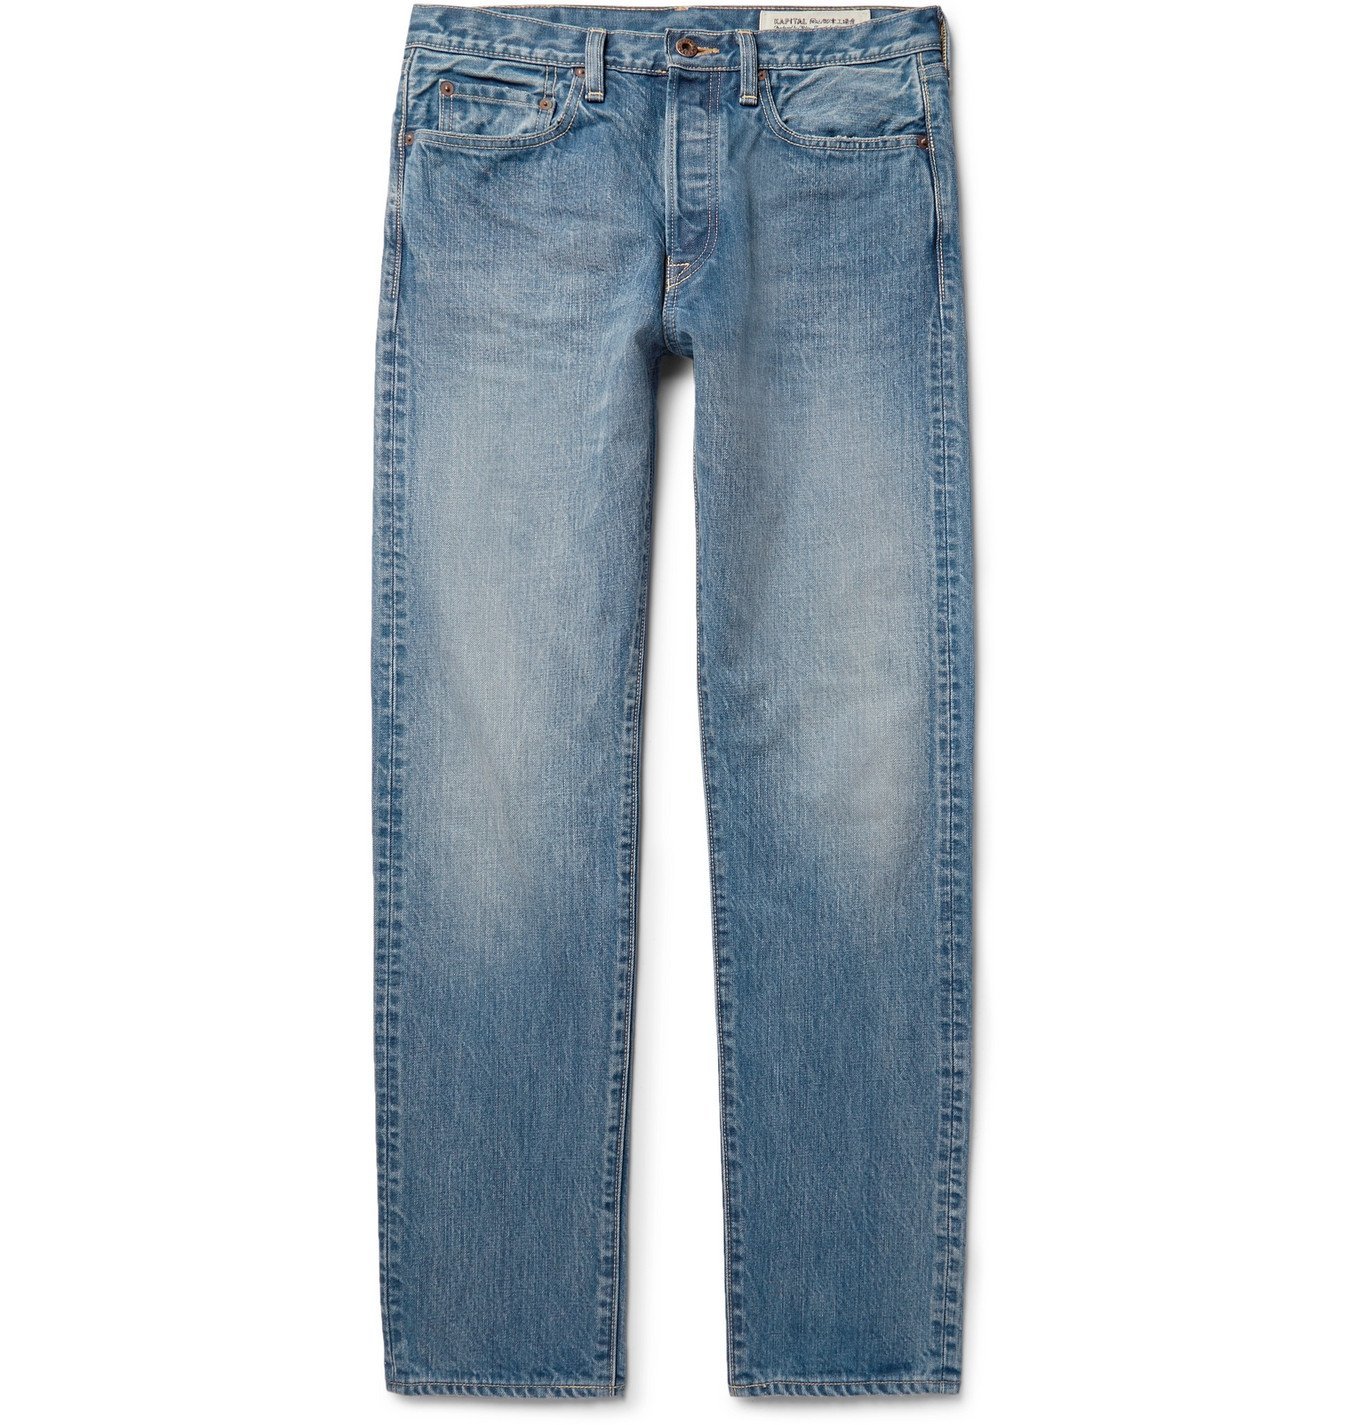 KAPITAL - Monkey Cisco Distressed Denim Jeans - Blue KAPITAL